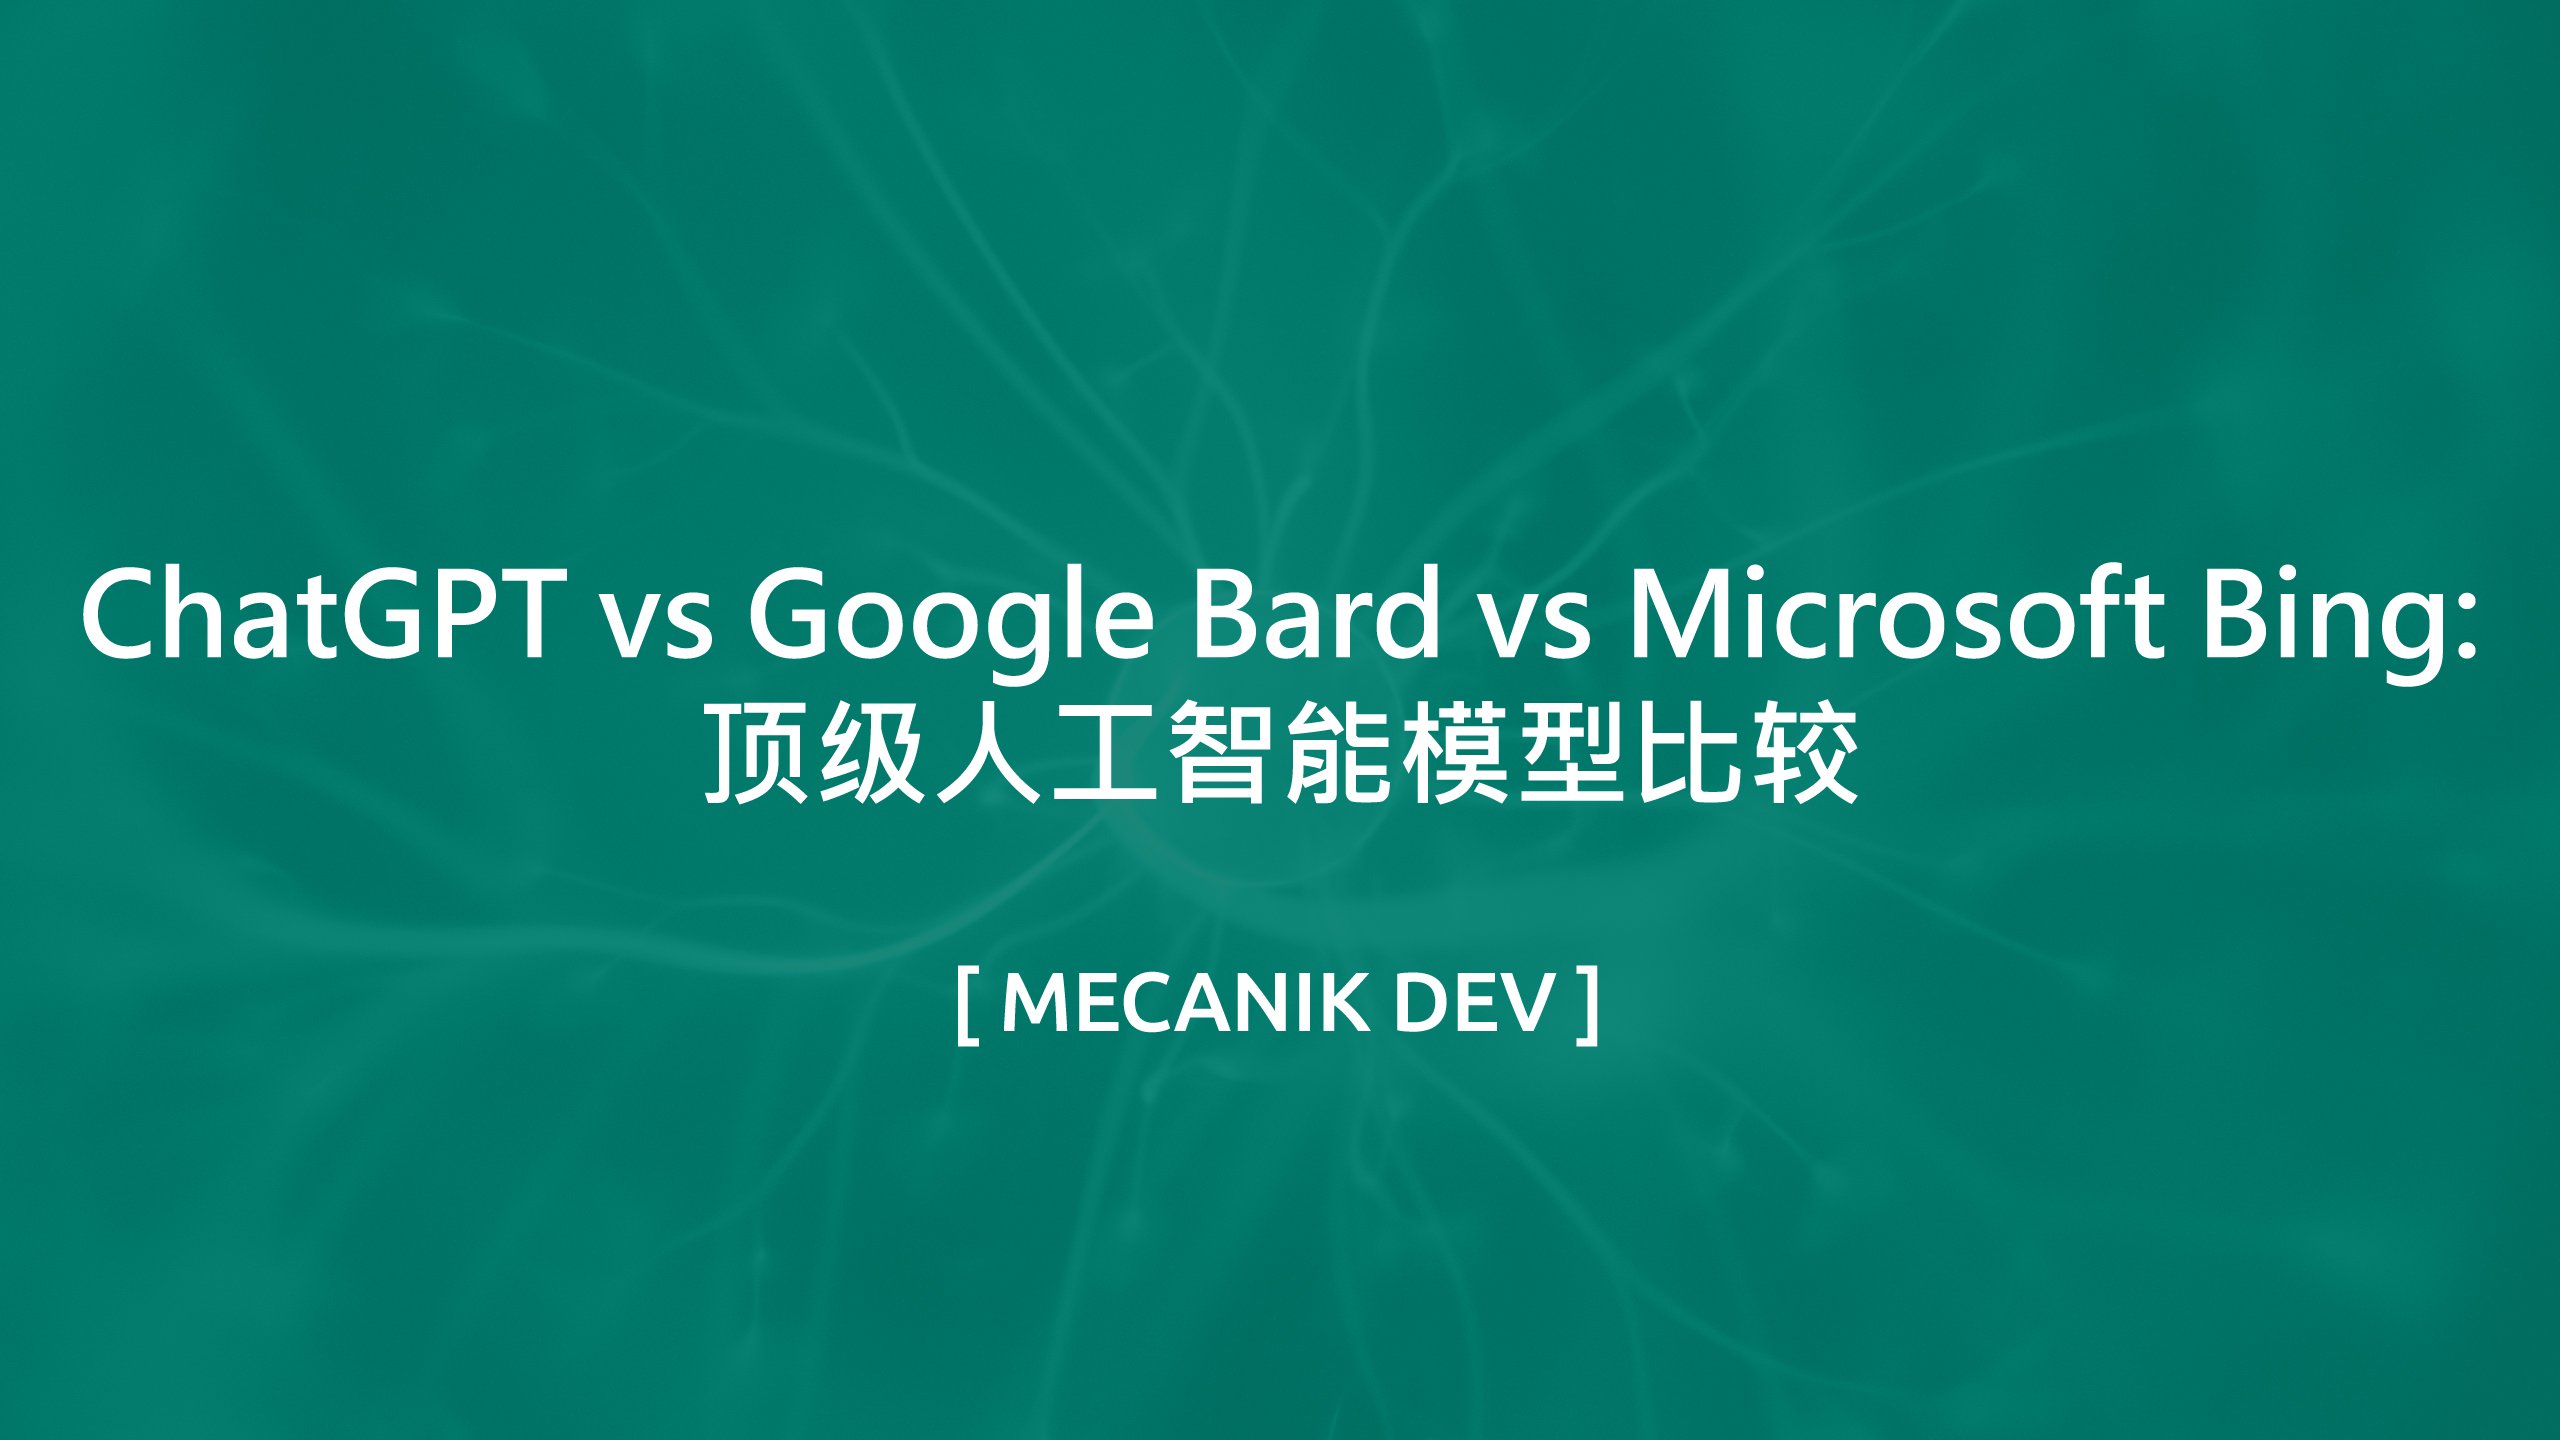 ChatGPT vs Google Bard vs Microsoft Bing：顶级人工智能模型比较